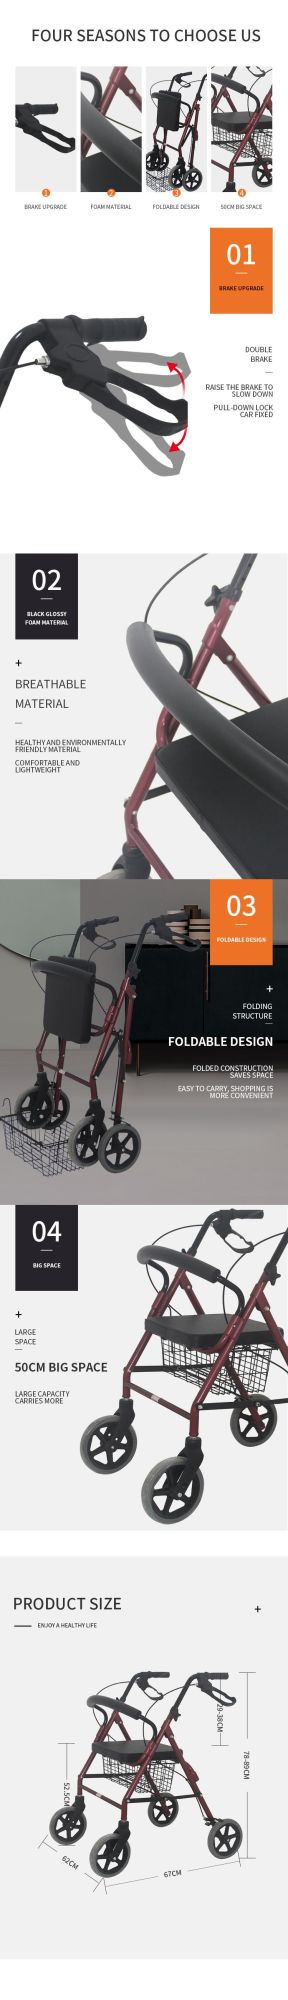 Shopping Aluminum manual transport walker chairs for adults walker rollator folding